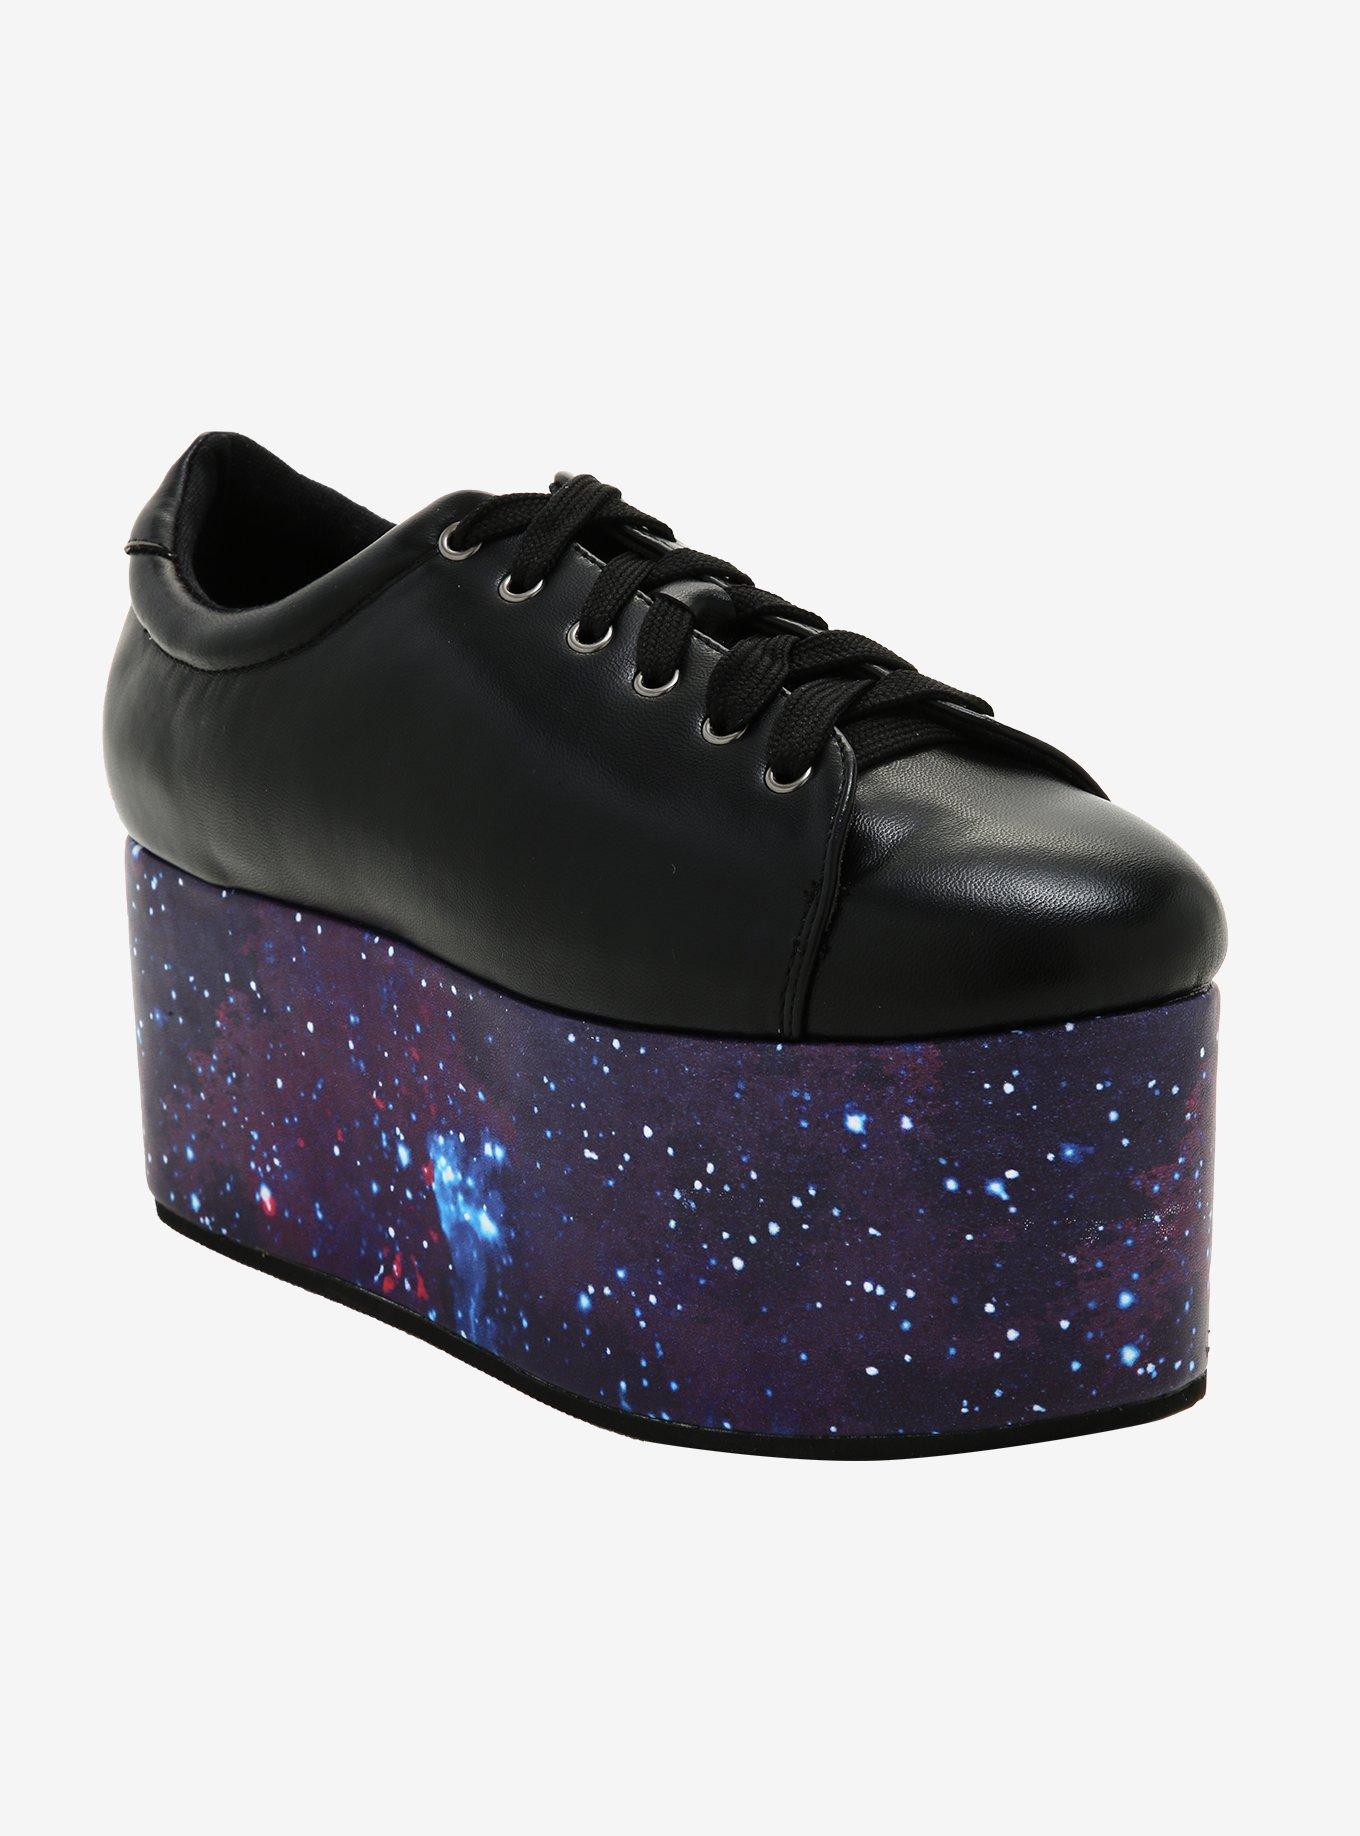 Black With Galaxy Sole Platform Sneakers, MULTI, hi-res